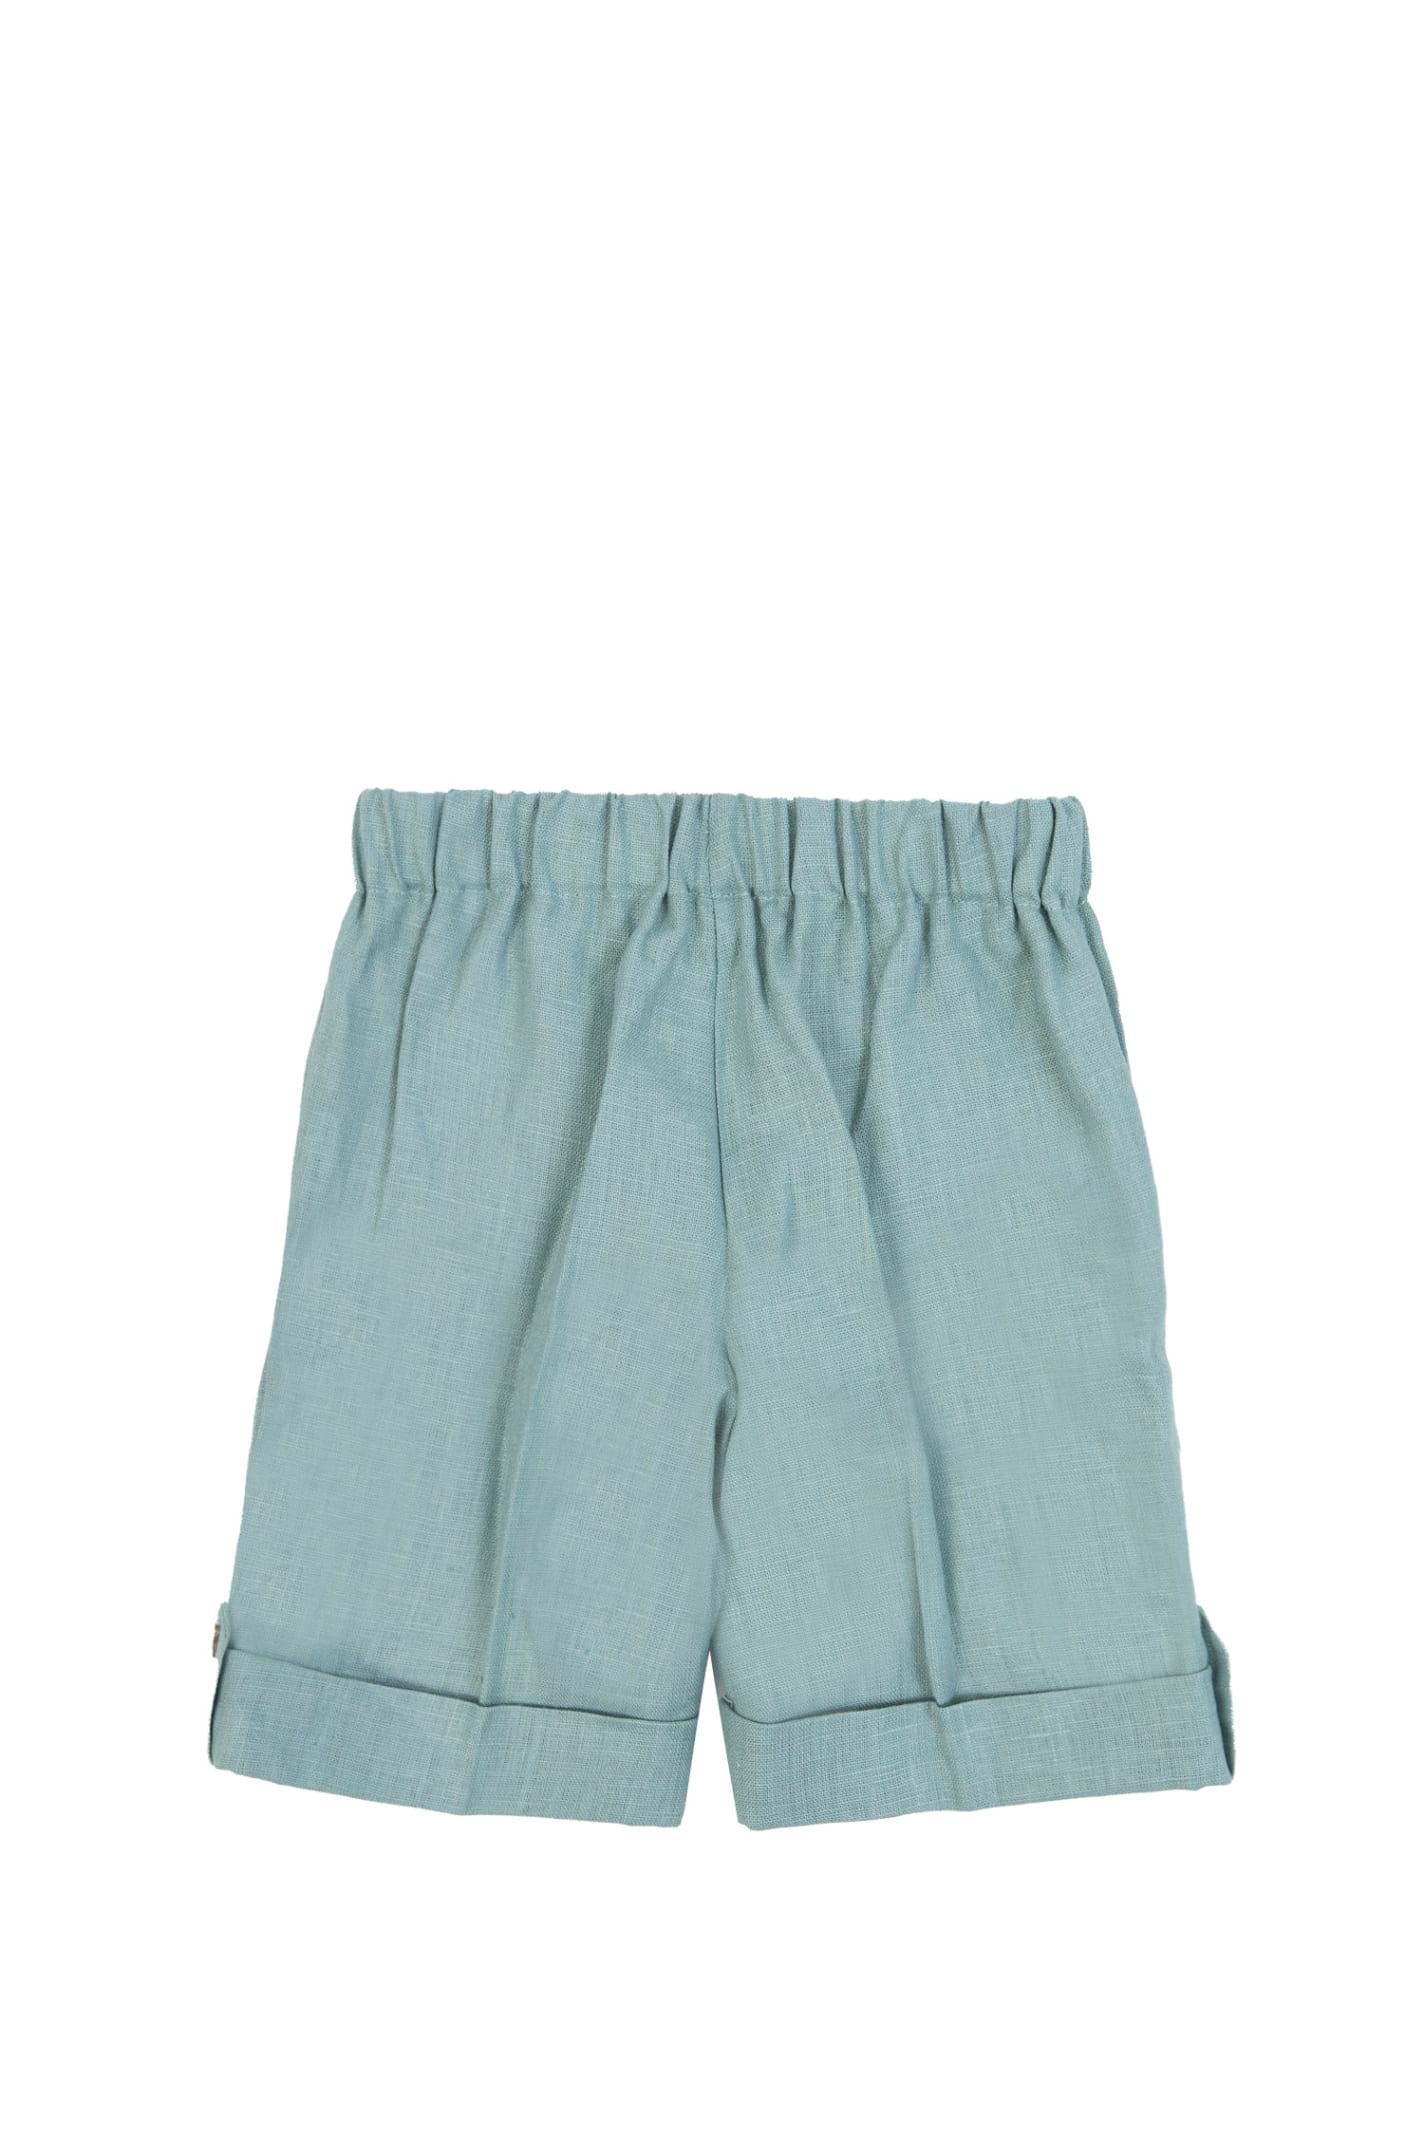 Shop La Stupenderia Linen Shorts